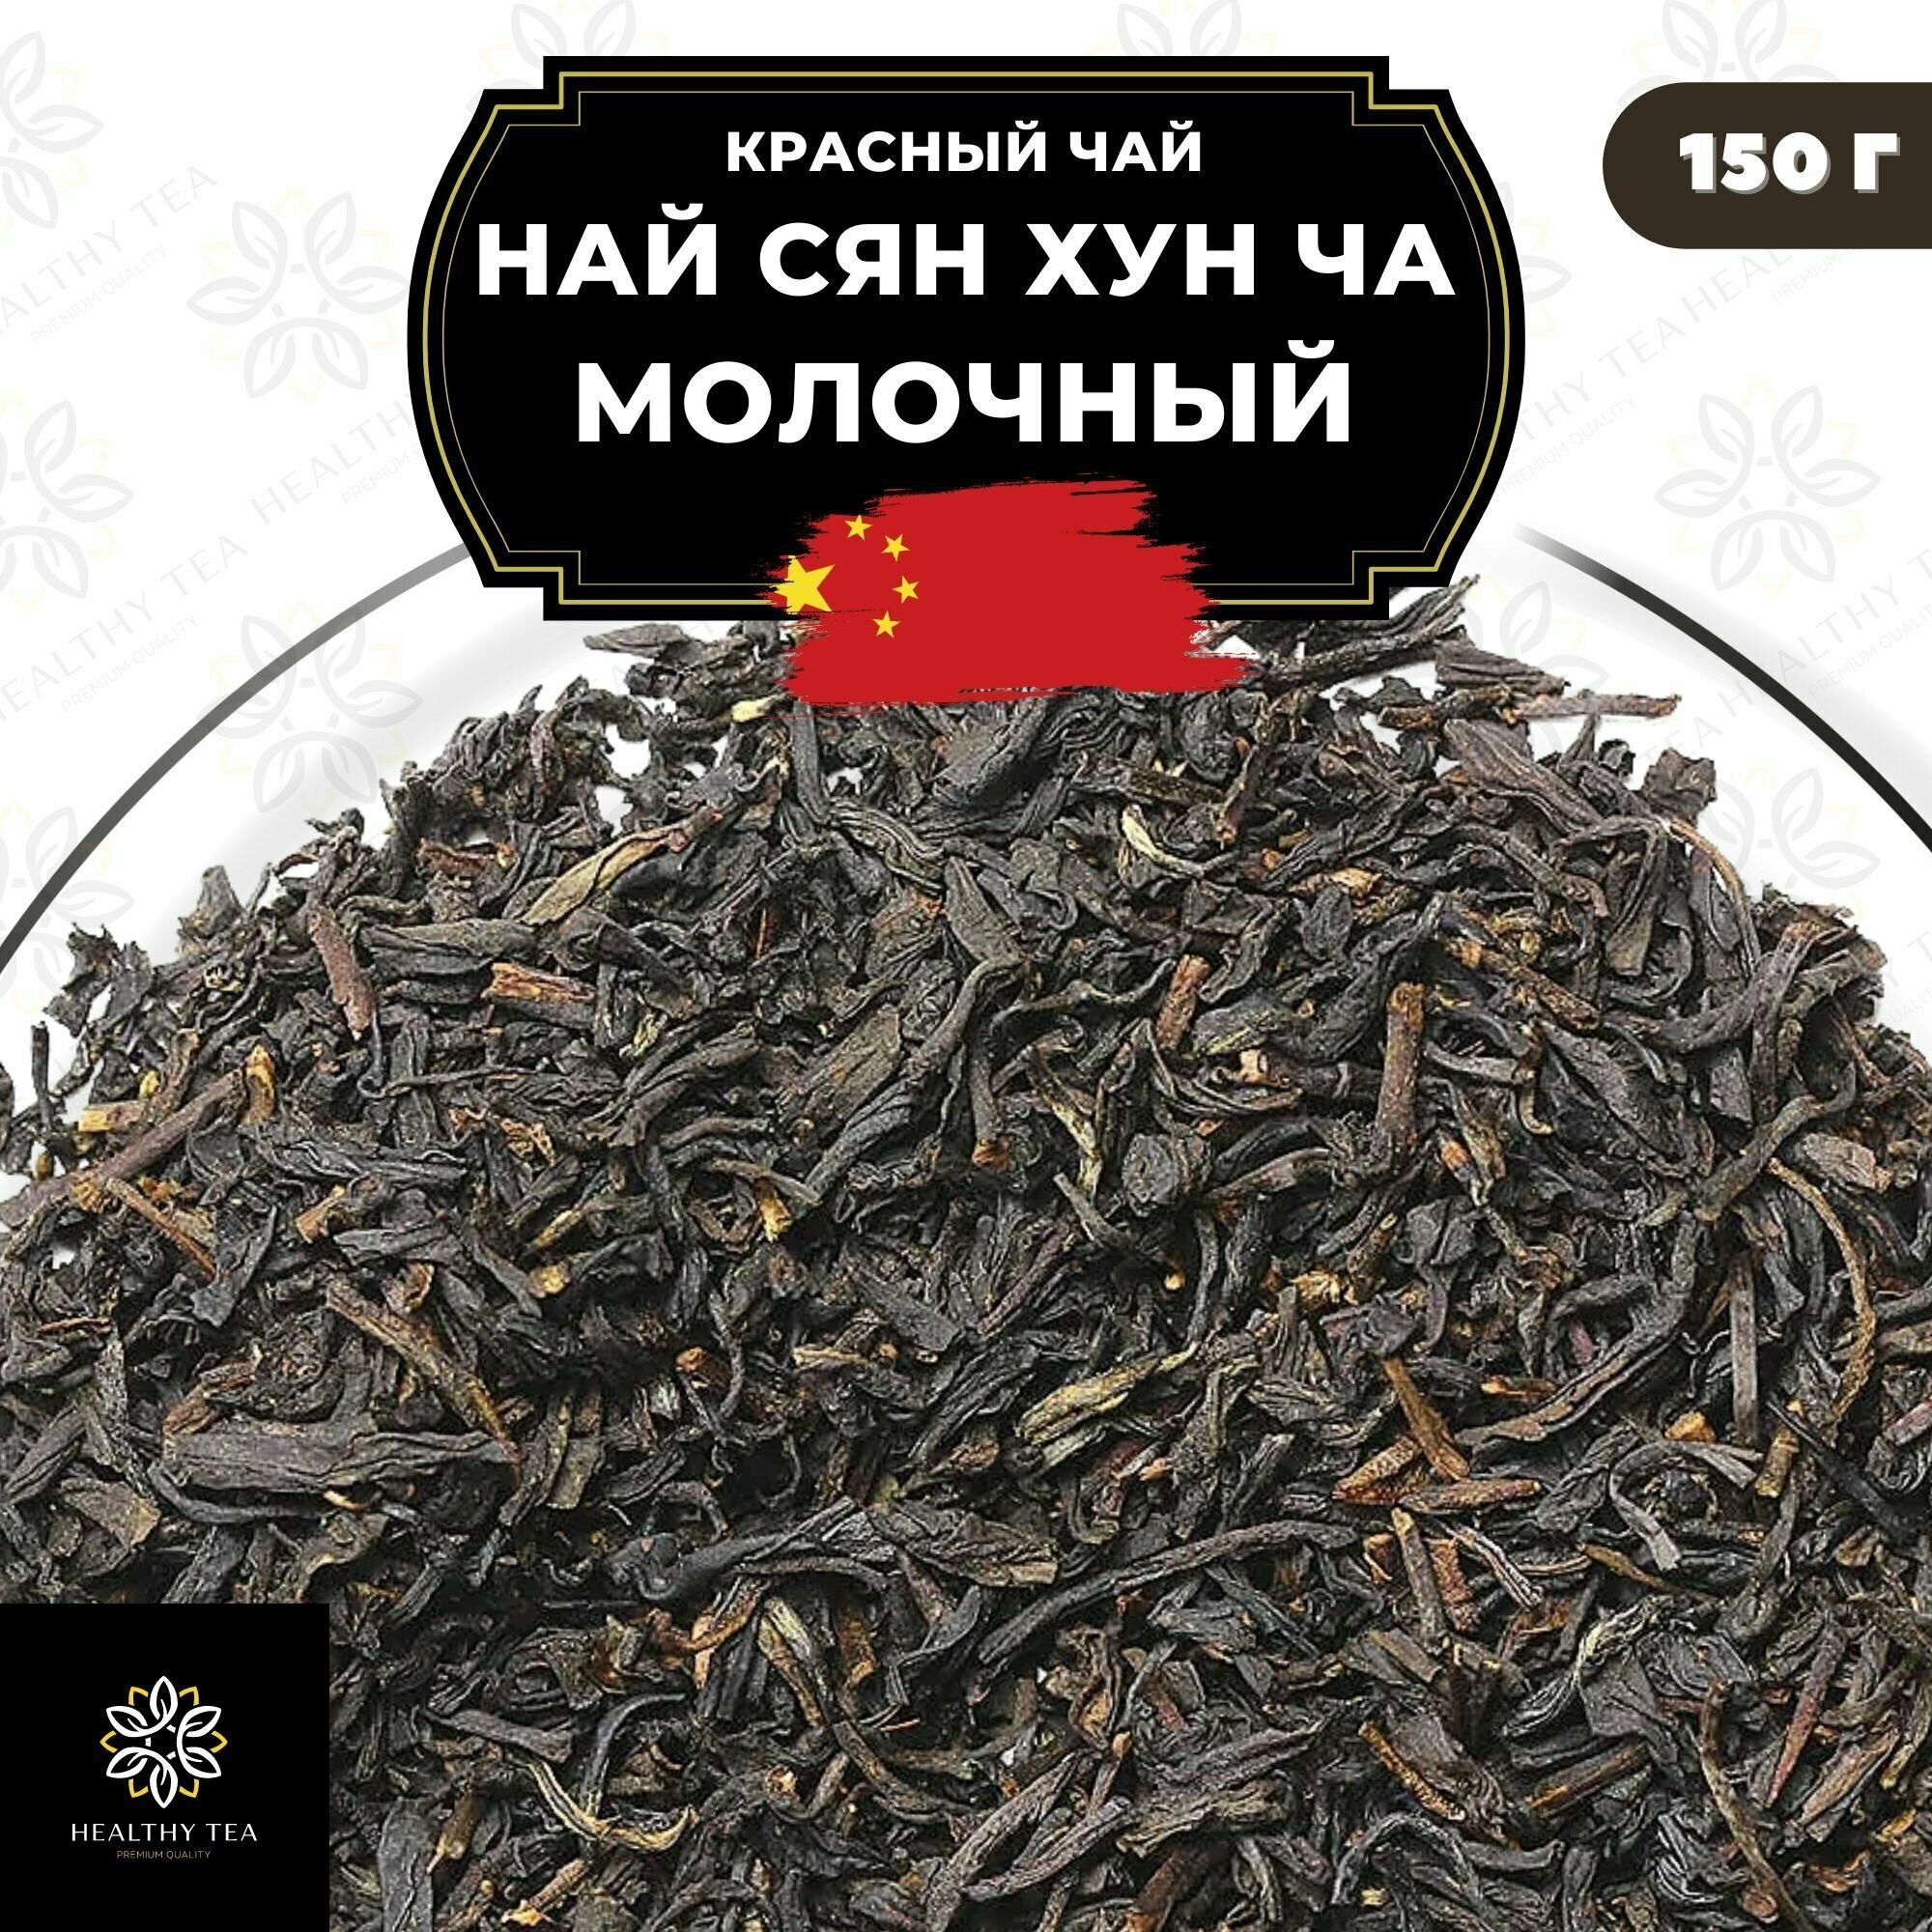 Китайский красный чай Най Сян Хун Ча (Молочный) Полезный чай / HEALTHY TEA, 150 г